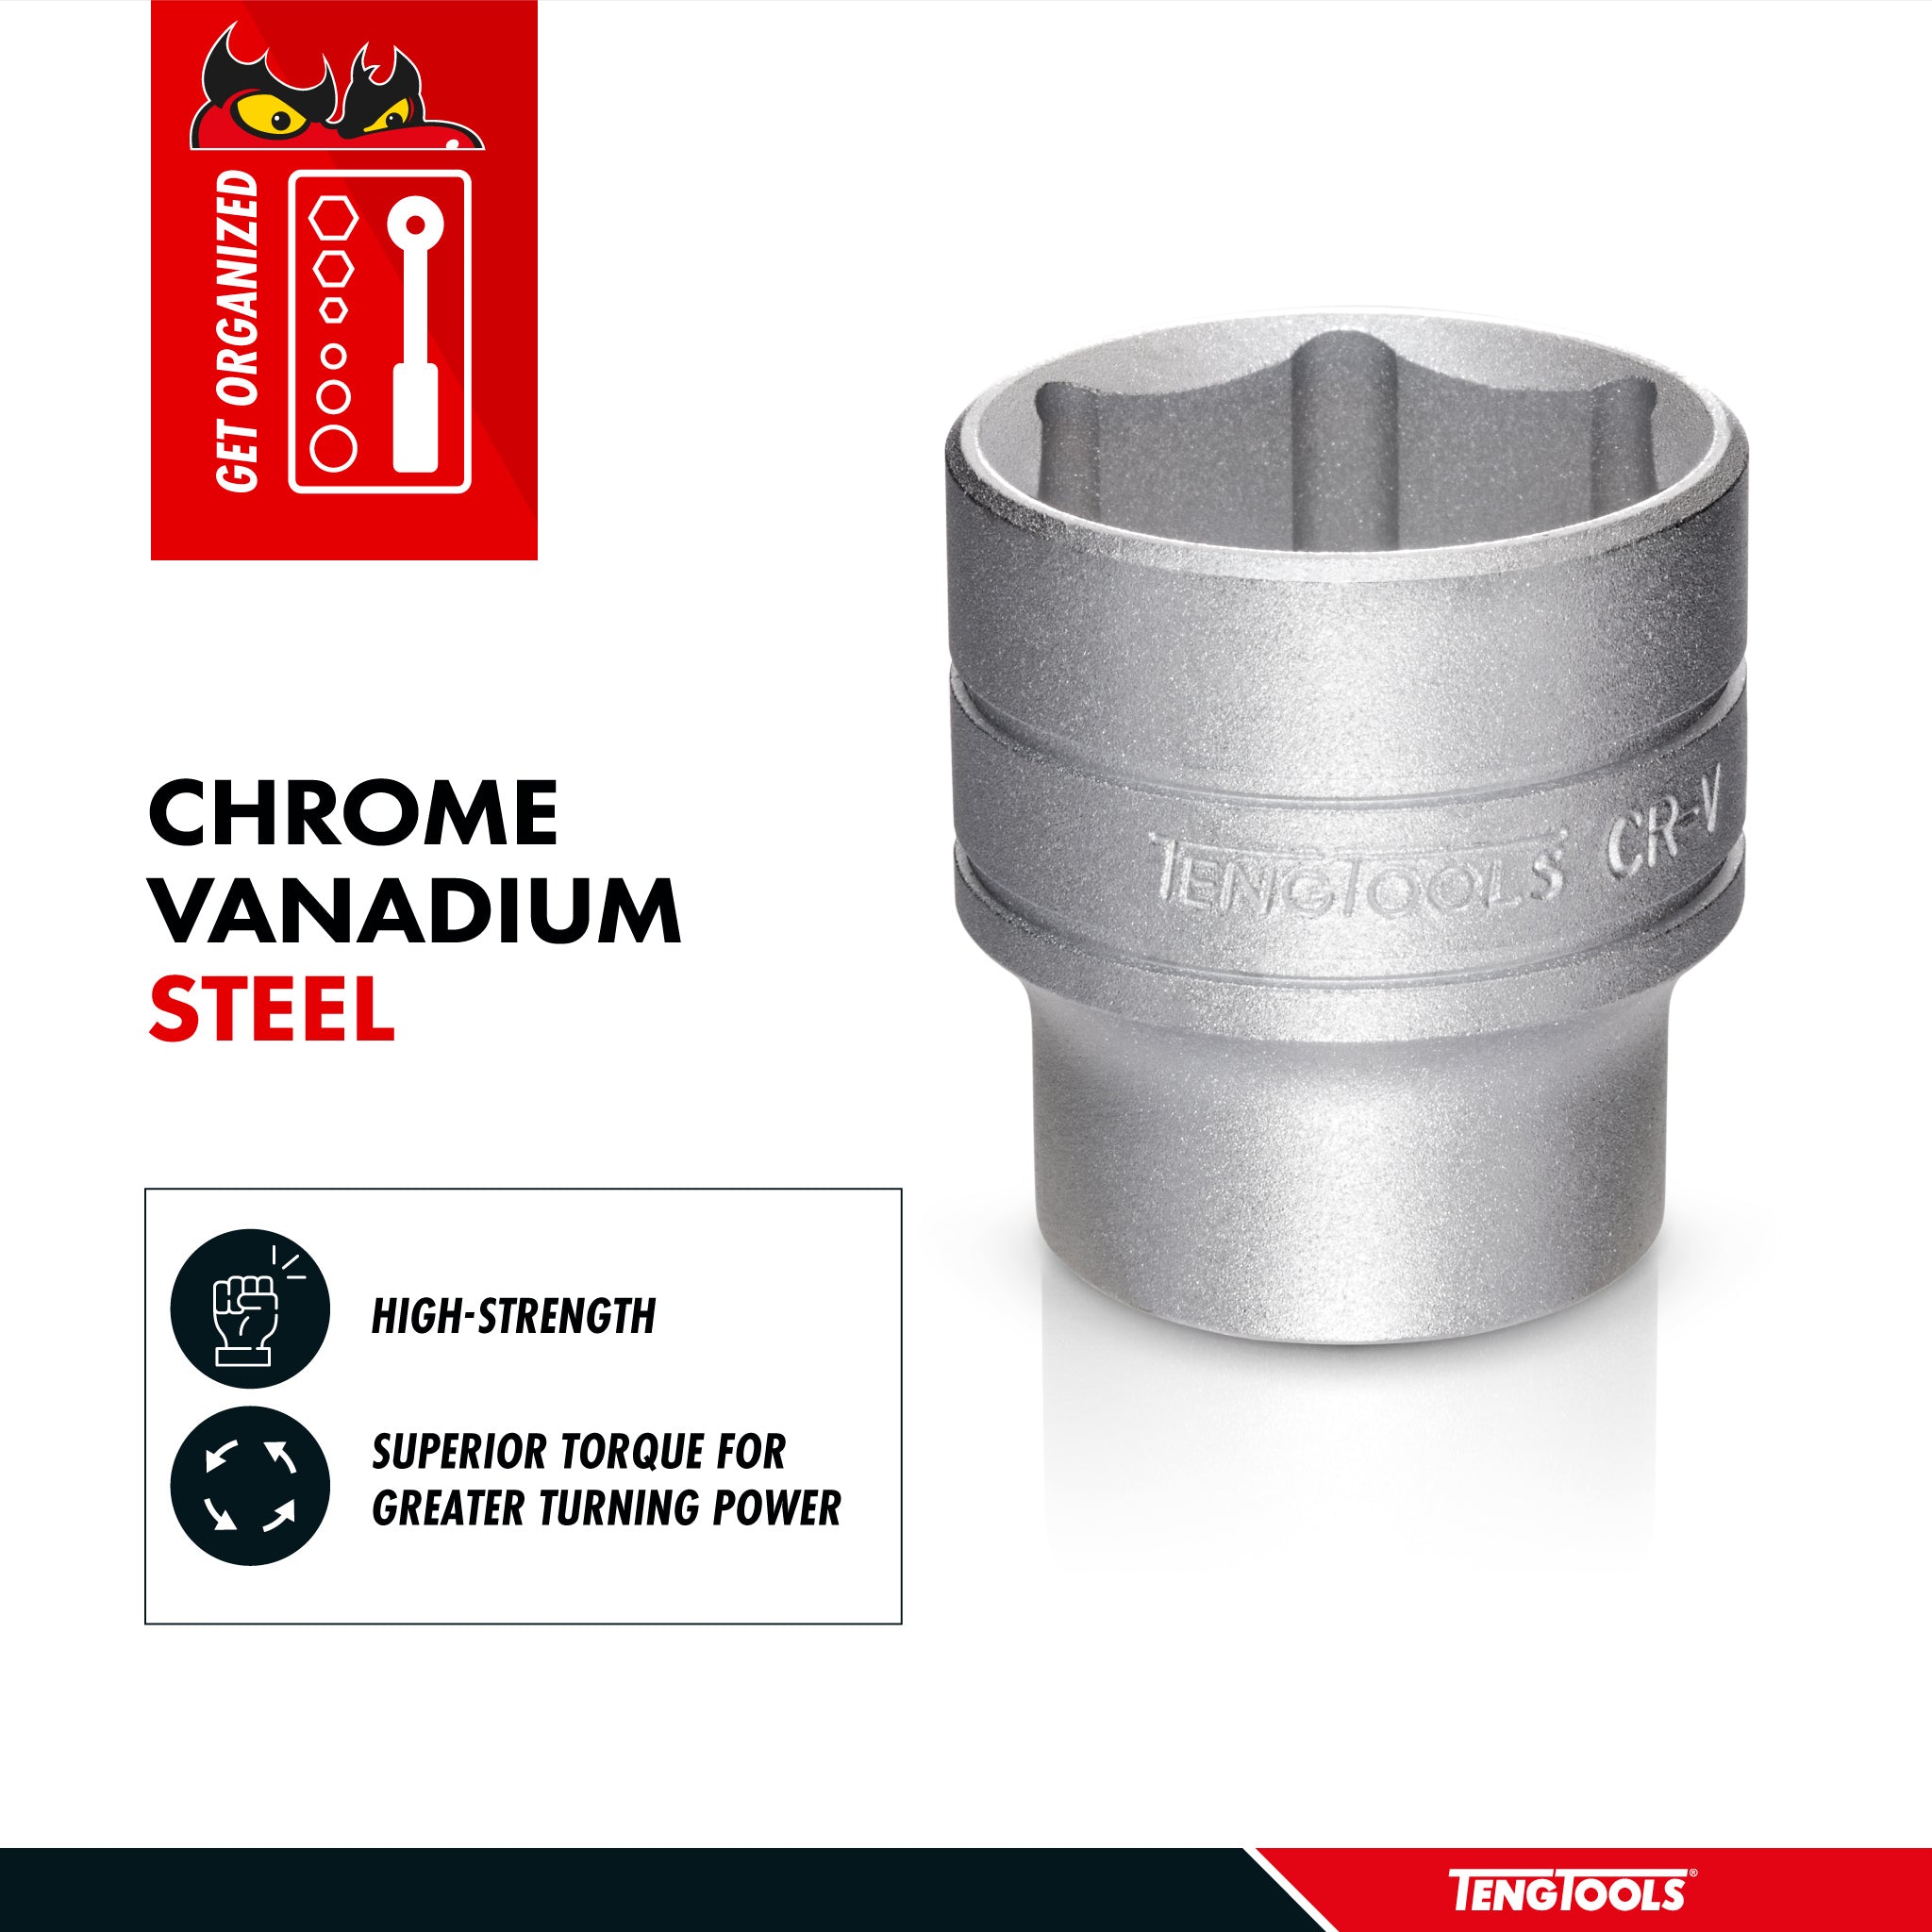 Teng Tools 6 Point SAE Shallow 3/8 Inch Drive Chrome Vanadium Sockets - 5/16